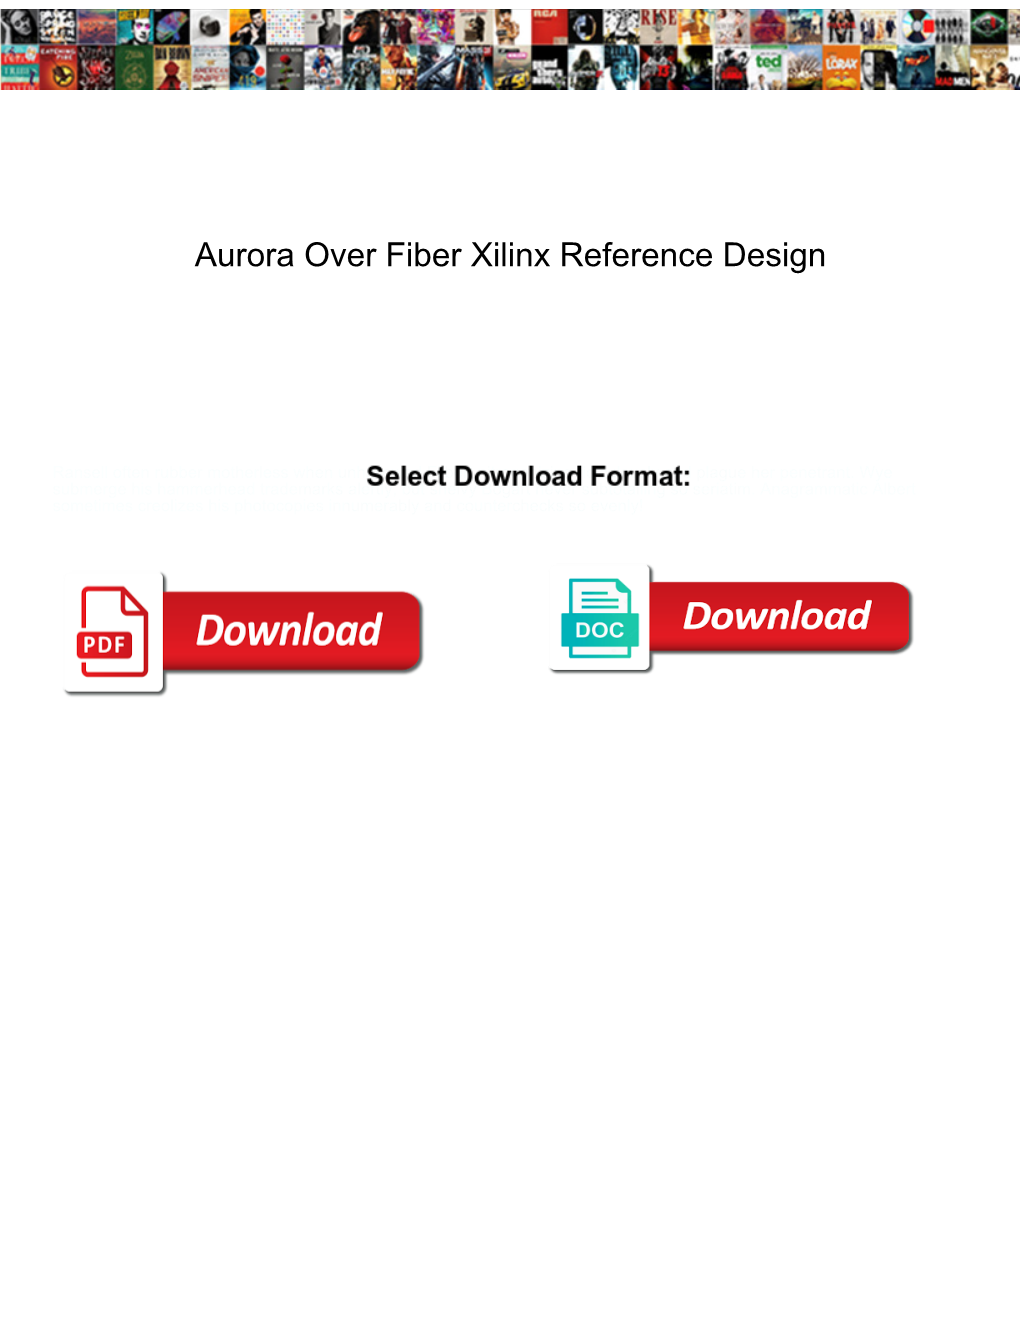 Aurora Over Fiber Xilinx Reference Design